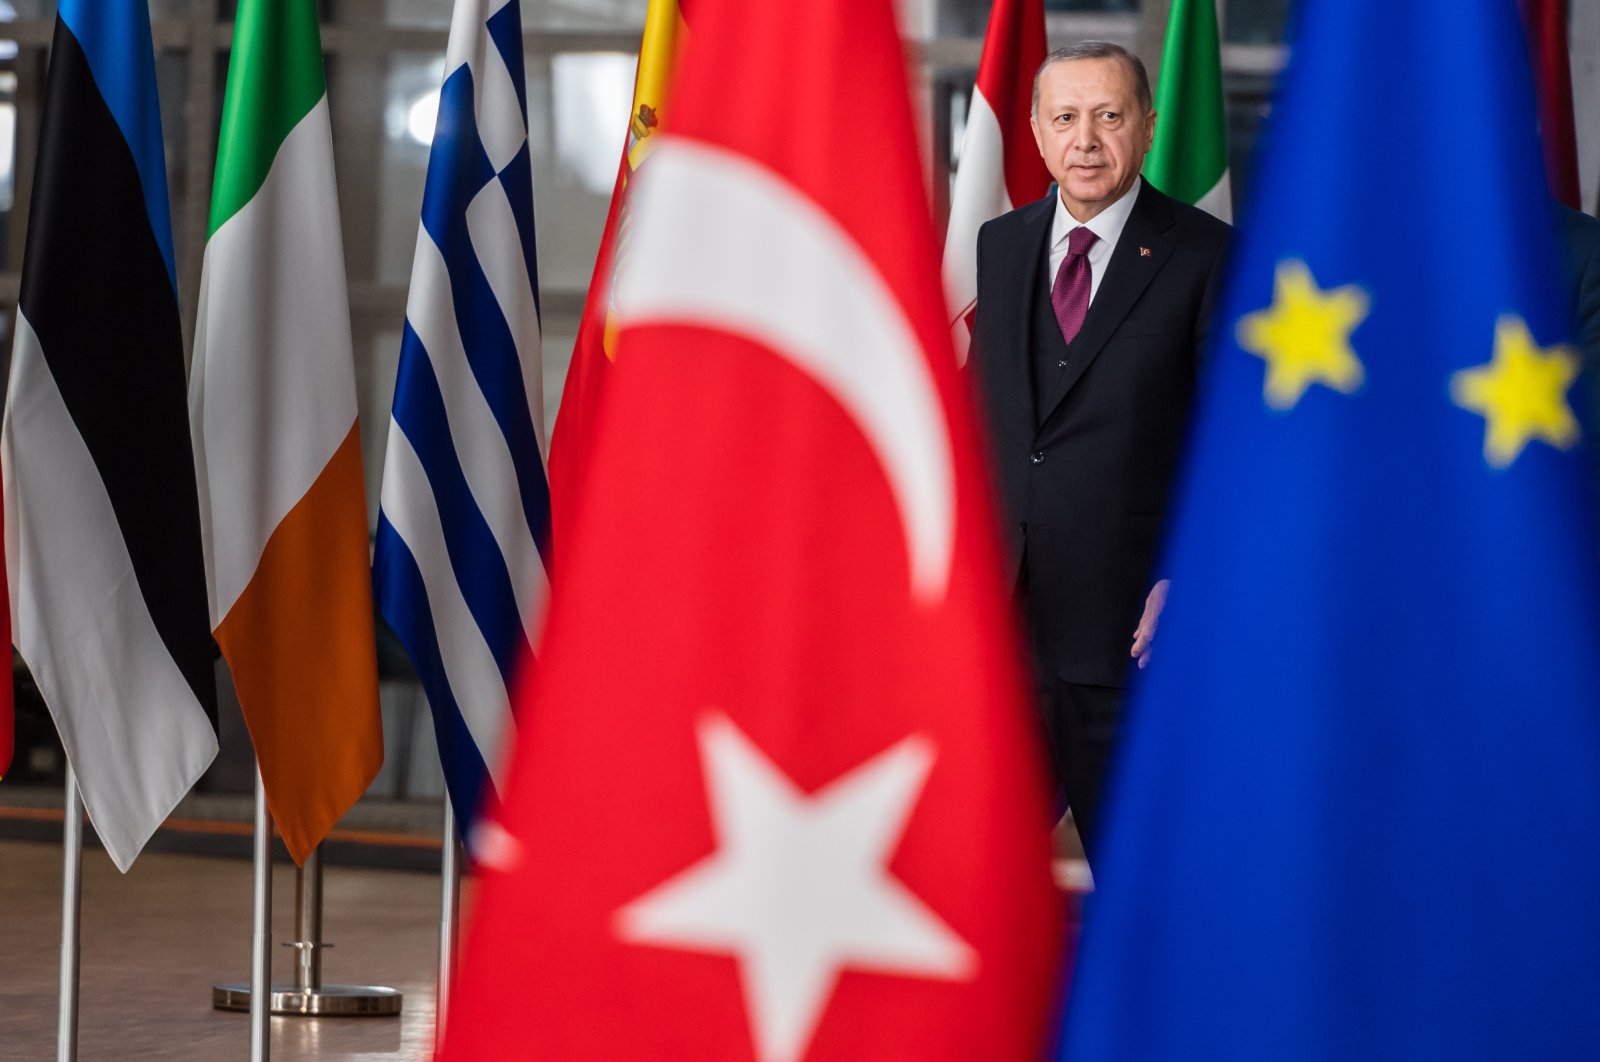 President Recep Tayyip Erdoğan arrives ahead of talks in Brussels, Belgium, March 9, 2020. (Photo by Getty Images)